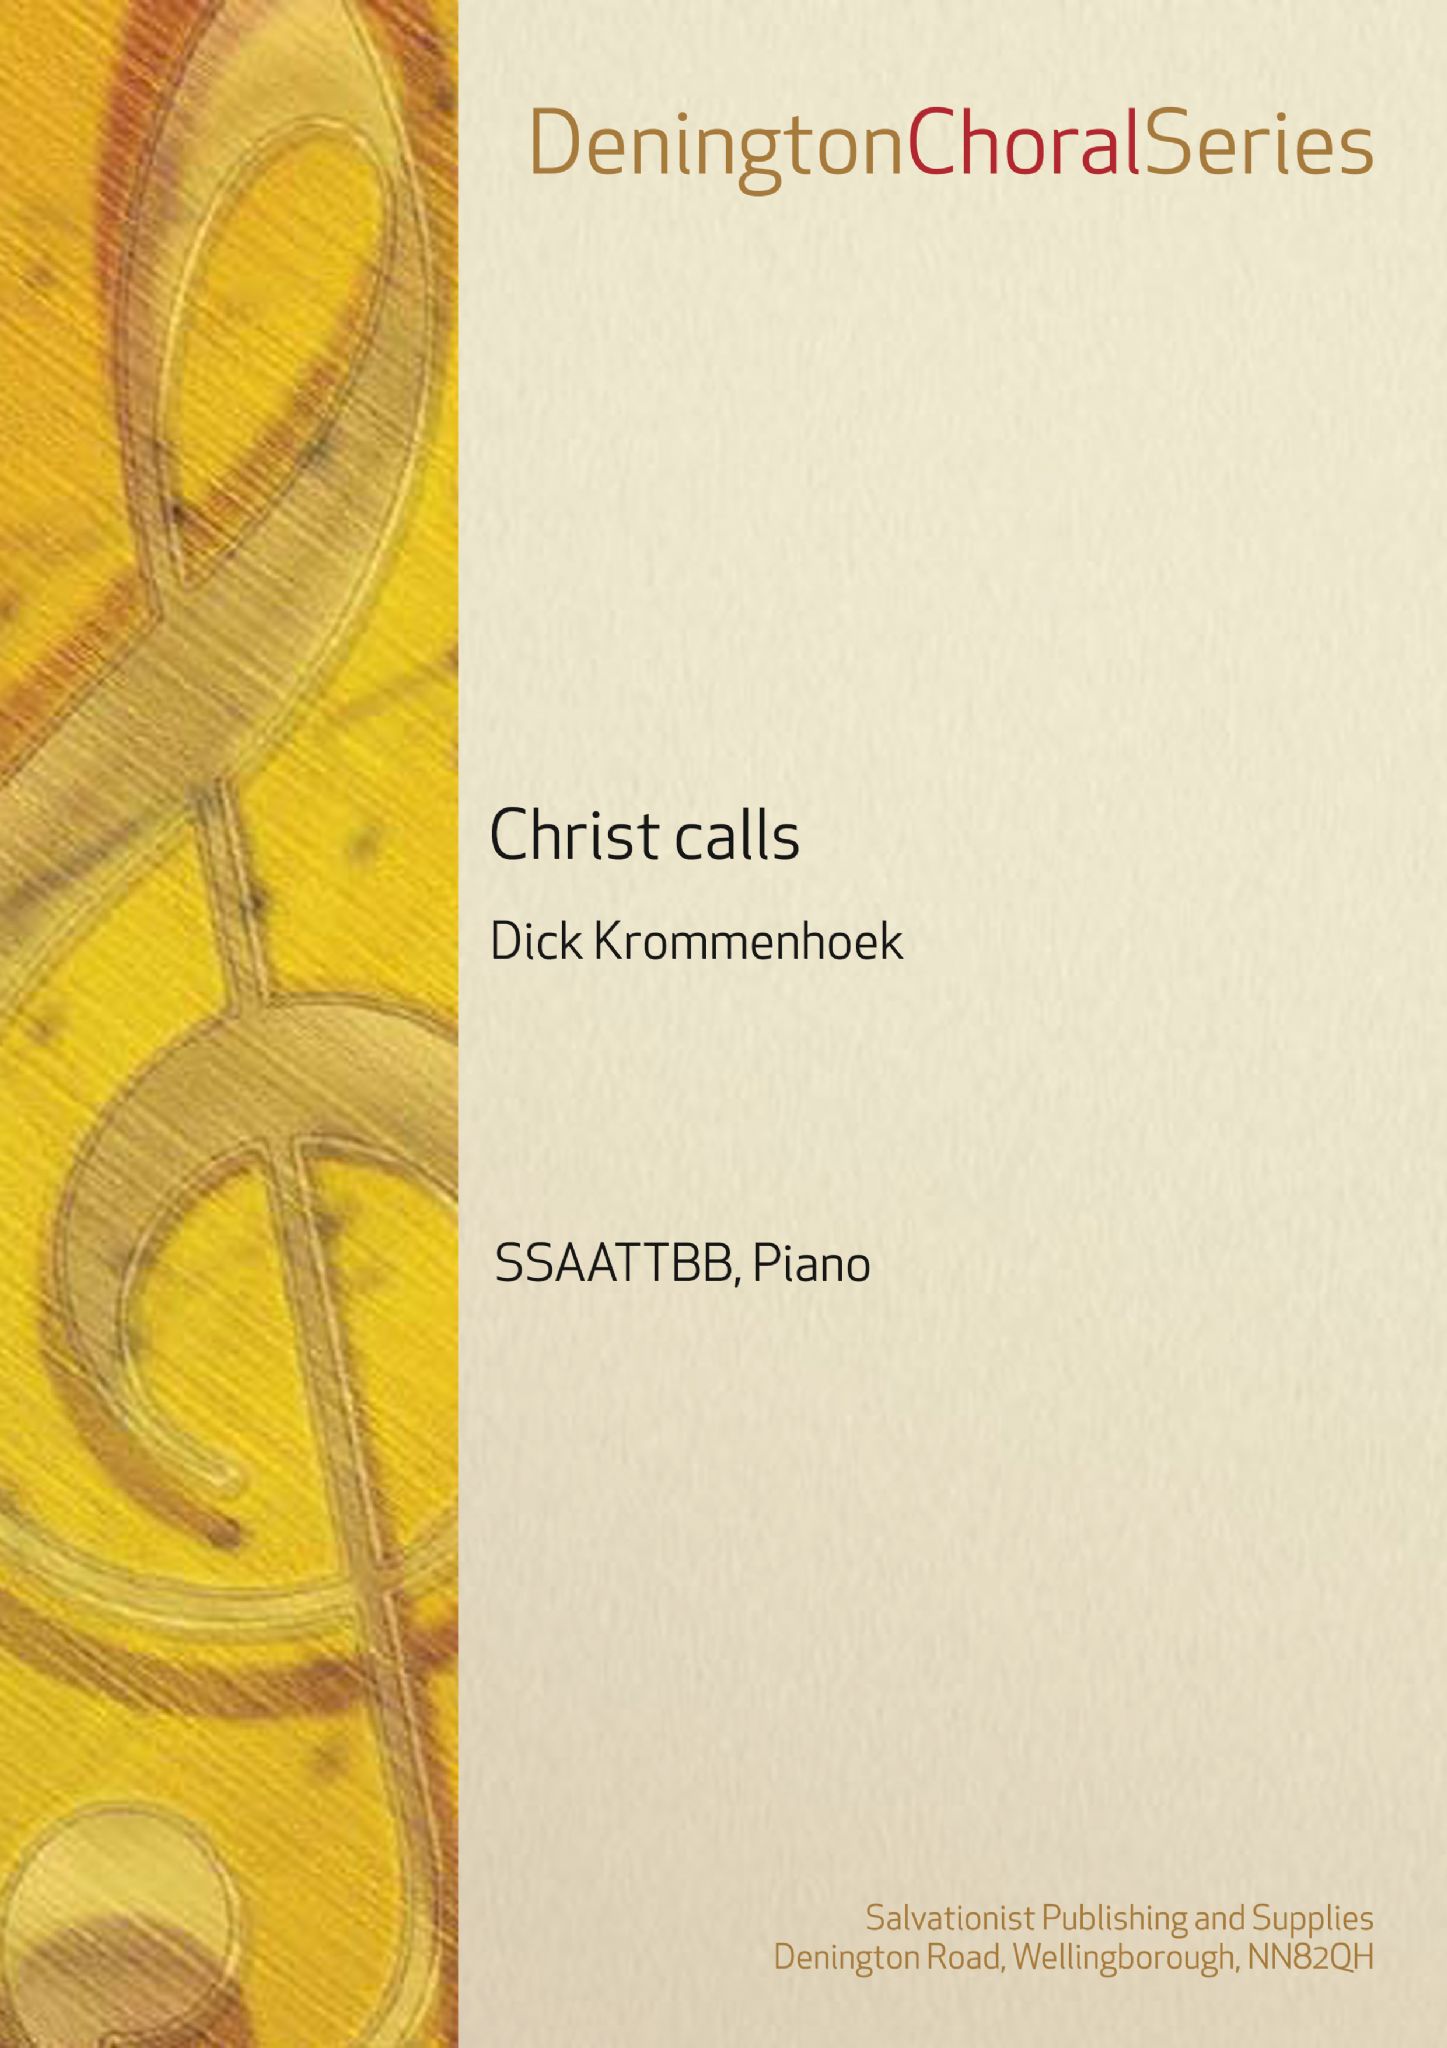 Christ calls - SSAATTBB, Piano